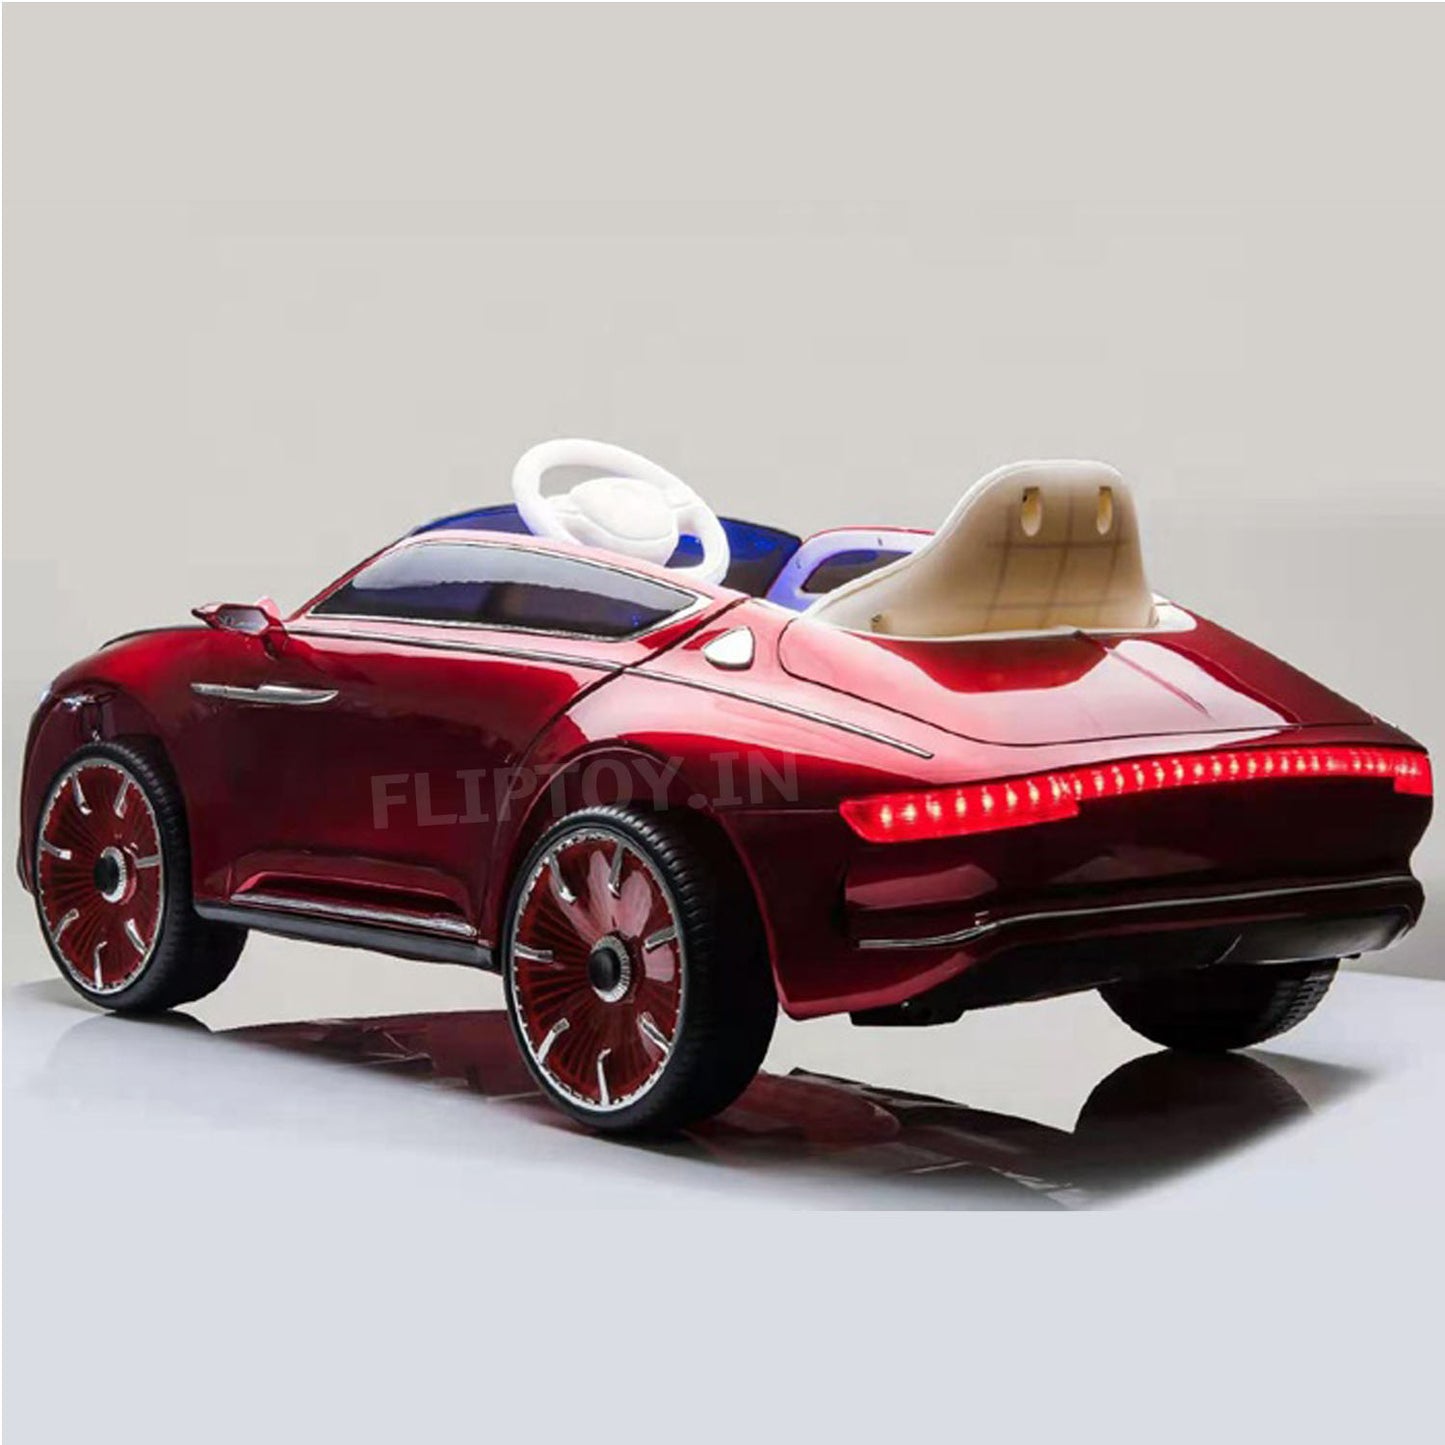 Car-12Volt Rechargeable | Electric Kids Ride on Car Toy | Model No. FLP-6188